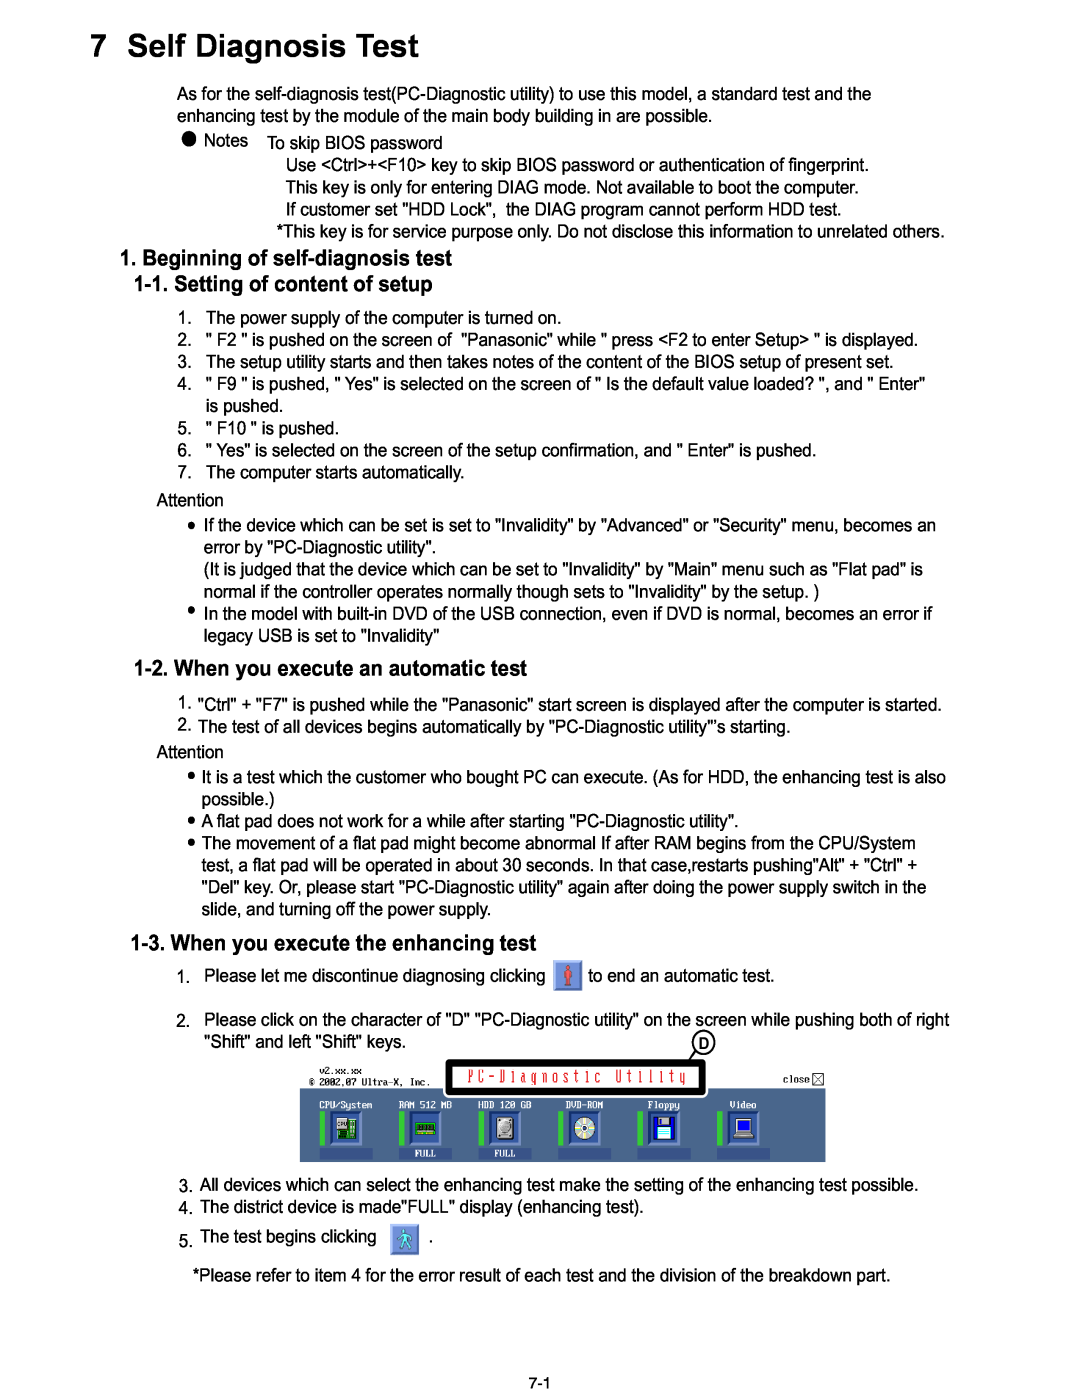 Matsushita CF-30 service manual Self Diagnosis Test, Beginning of self-diagnosis test 1-1. Setting of content of setup 